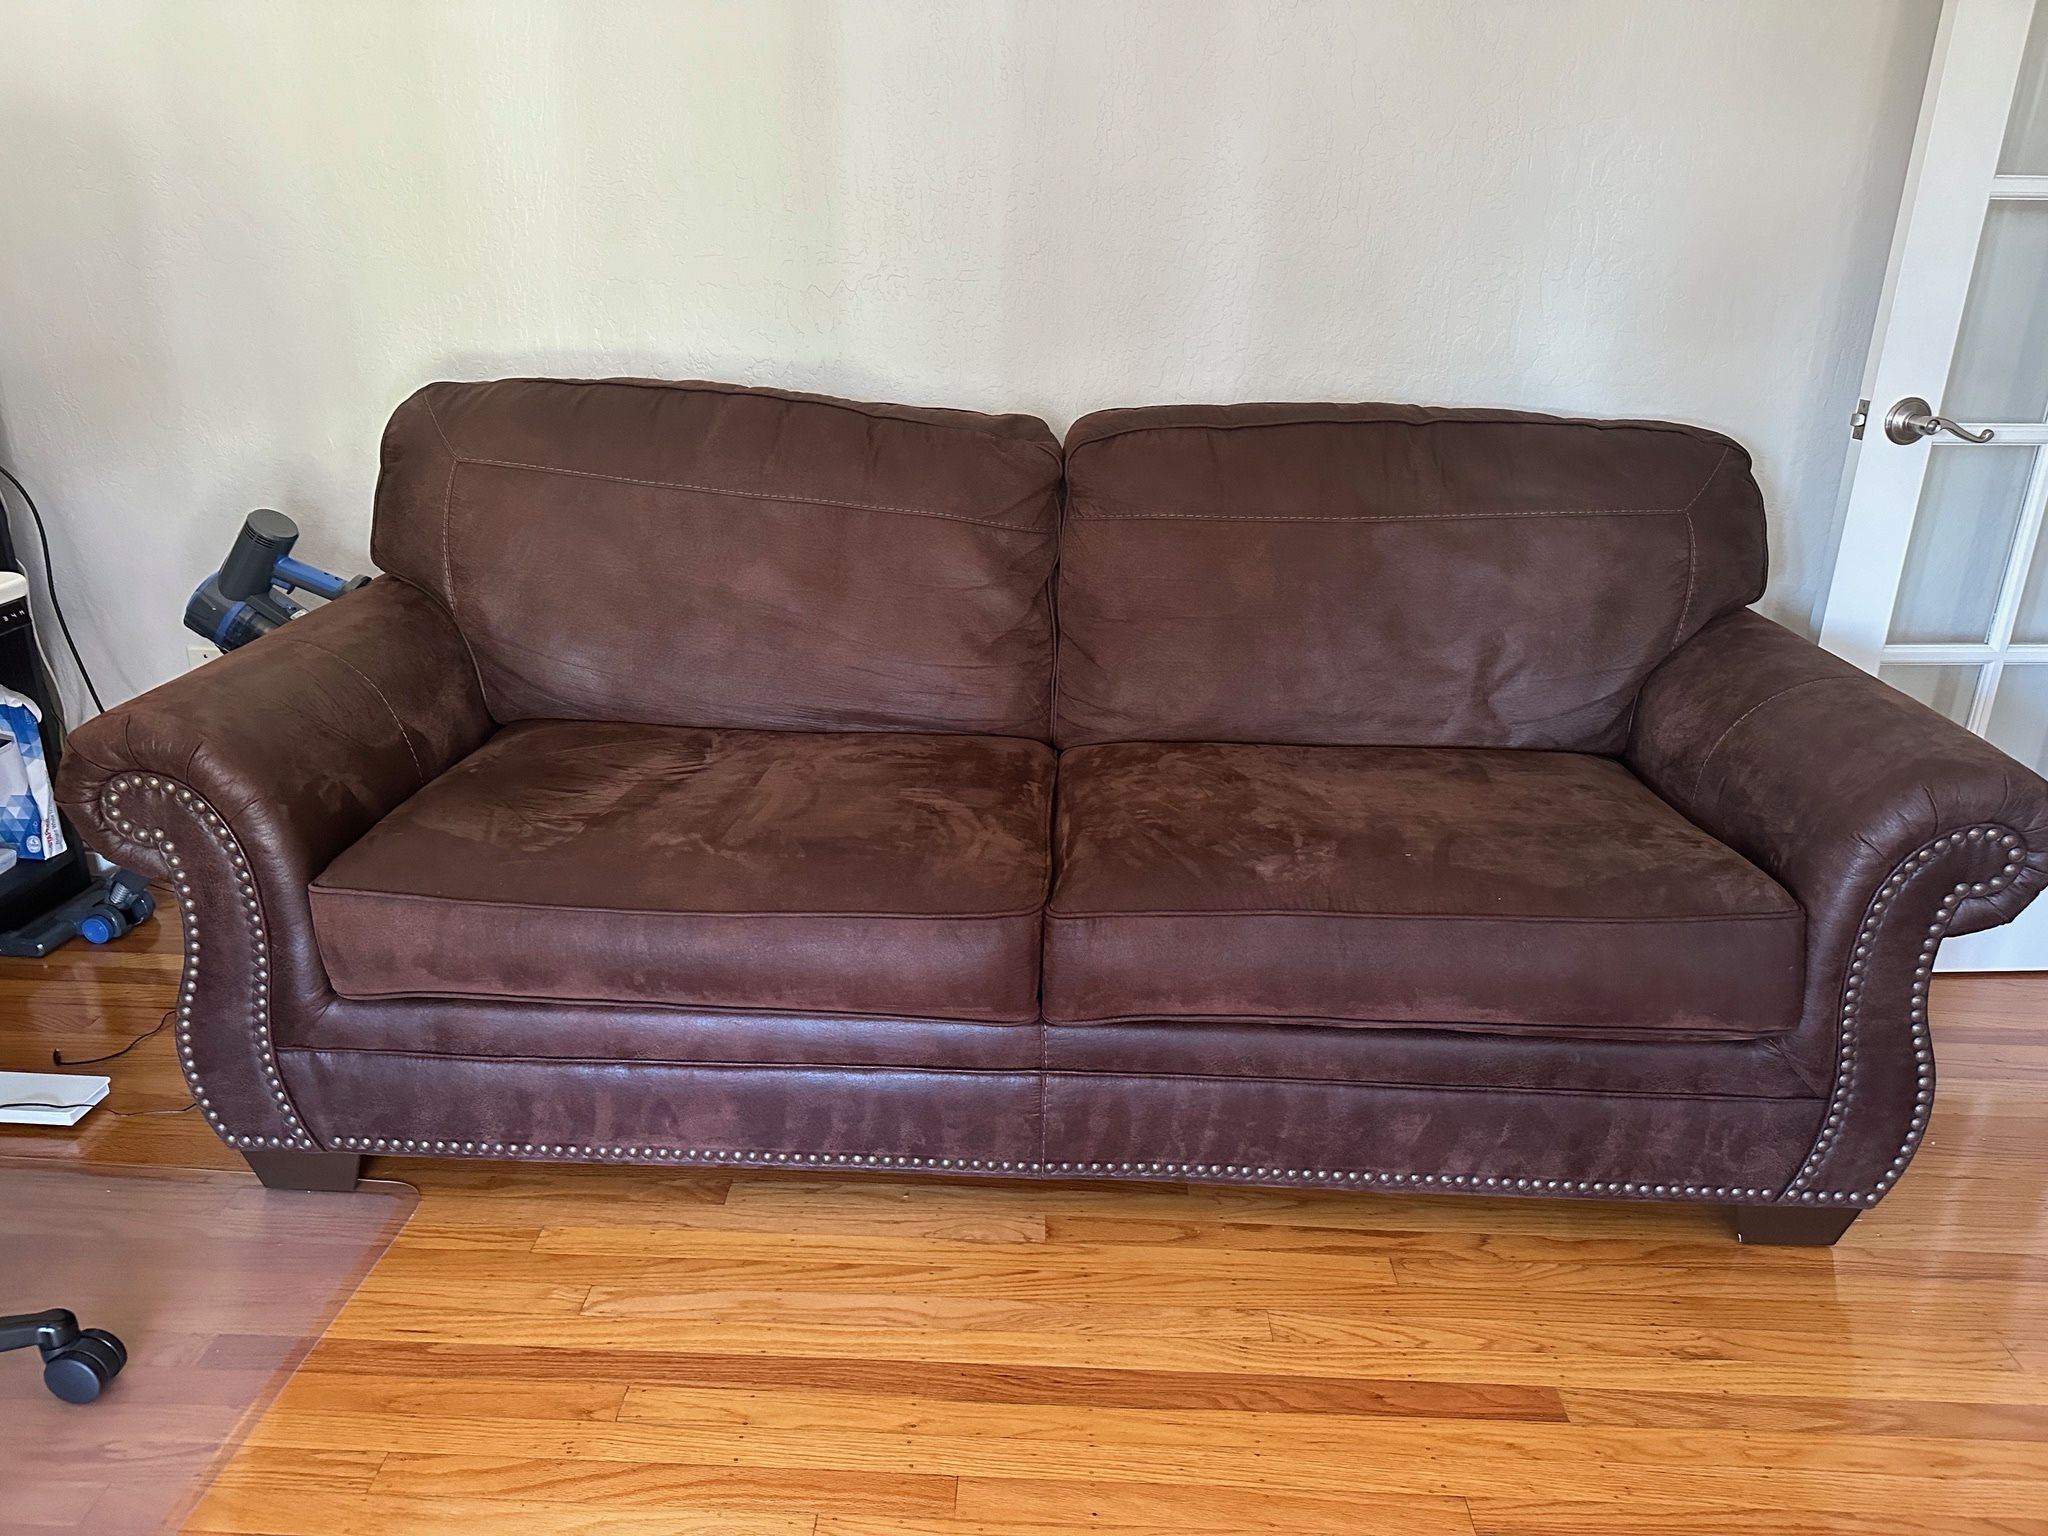 Sleeper Sofa To Sell